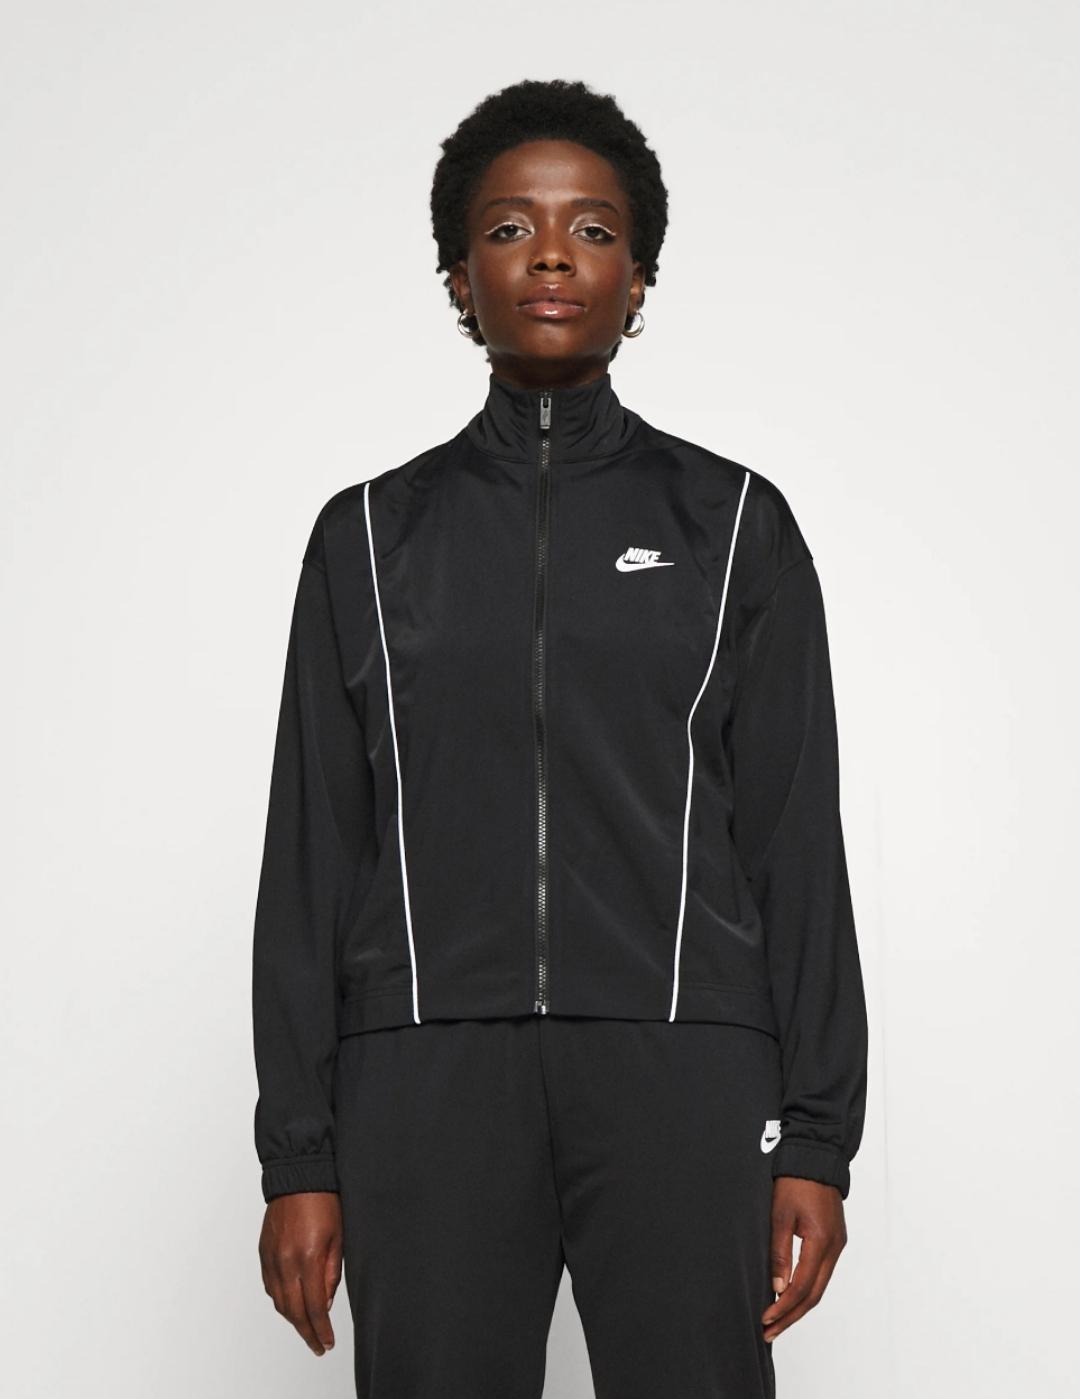 Exquisito penitencia Cap Chándal Nike Sportswear Essentials para Mujer Negro/Blan